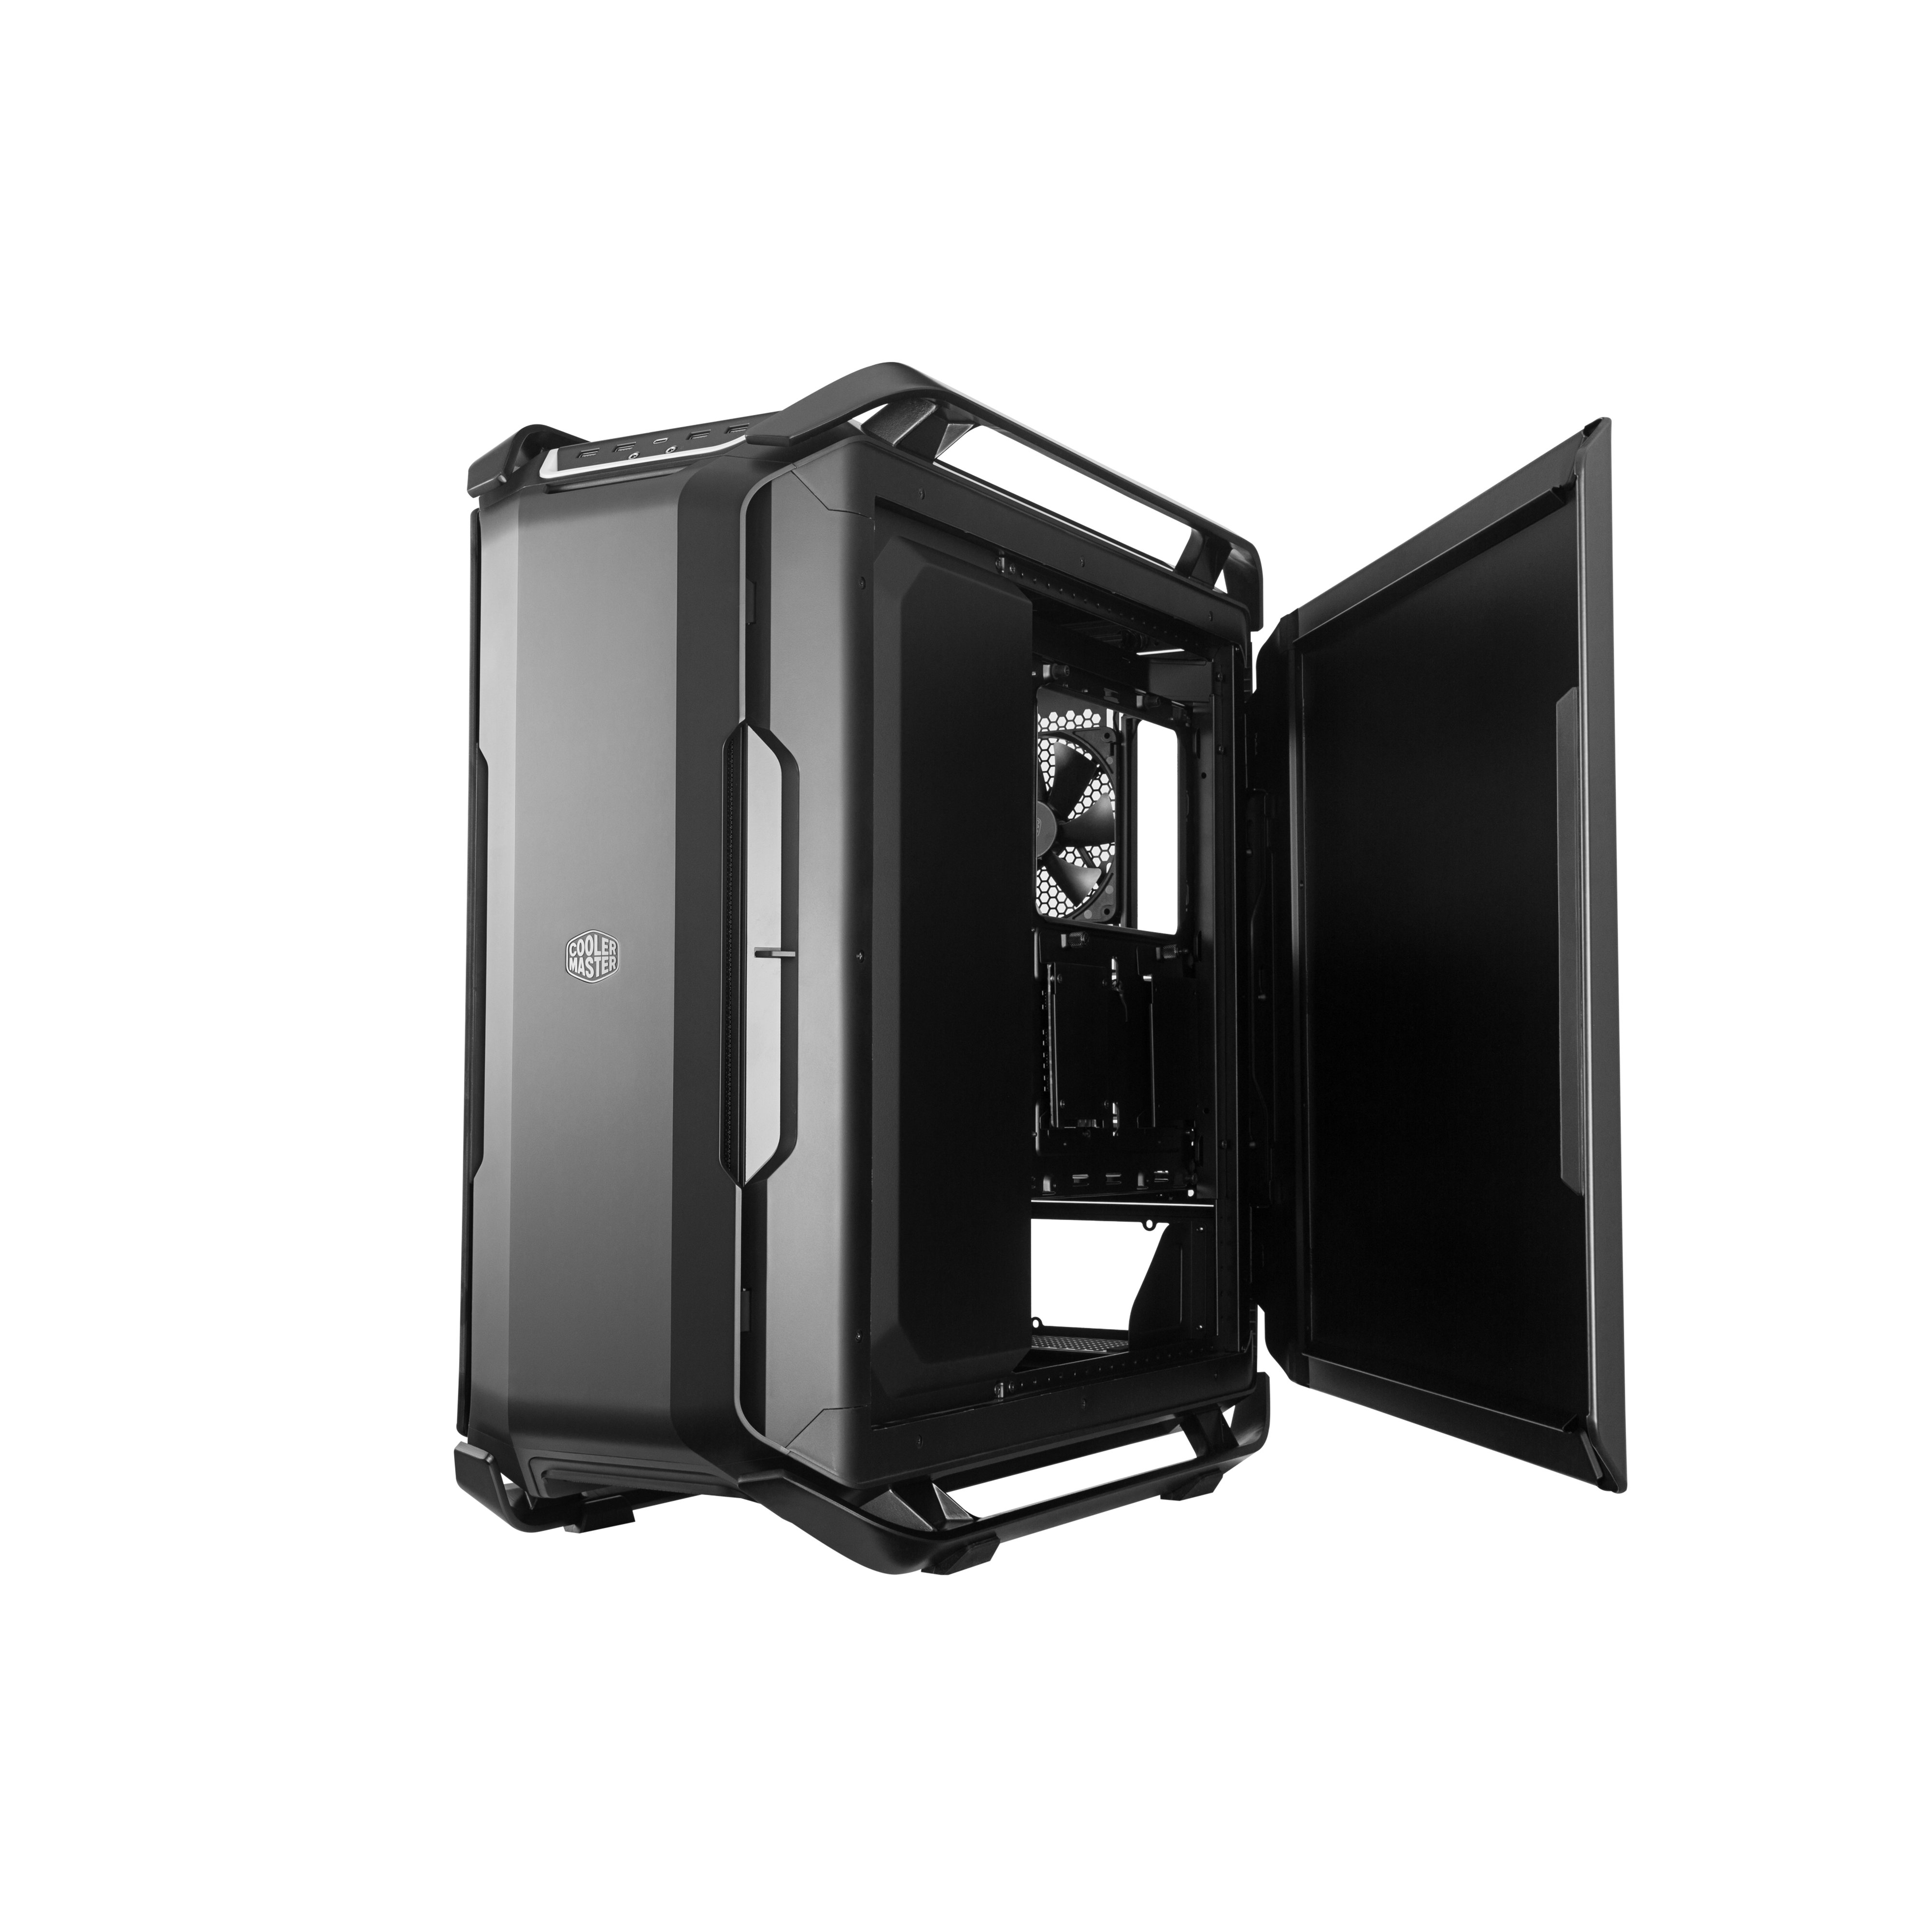 COSMOS C700P Black Edition Full Tower PC Case | Cooler Master